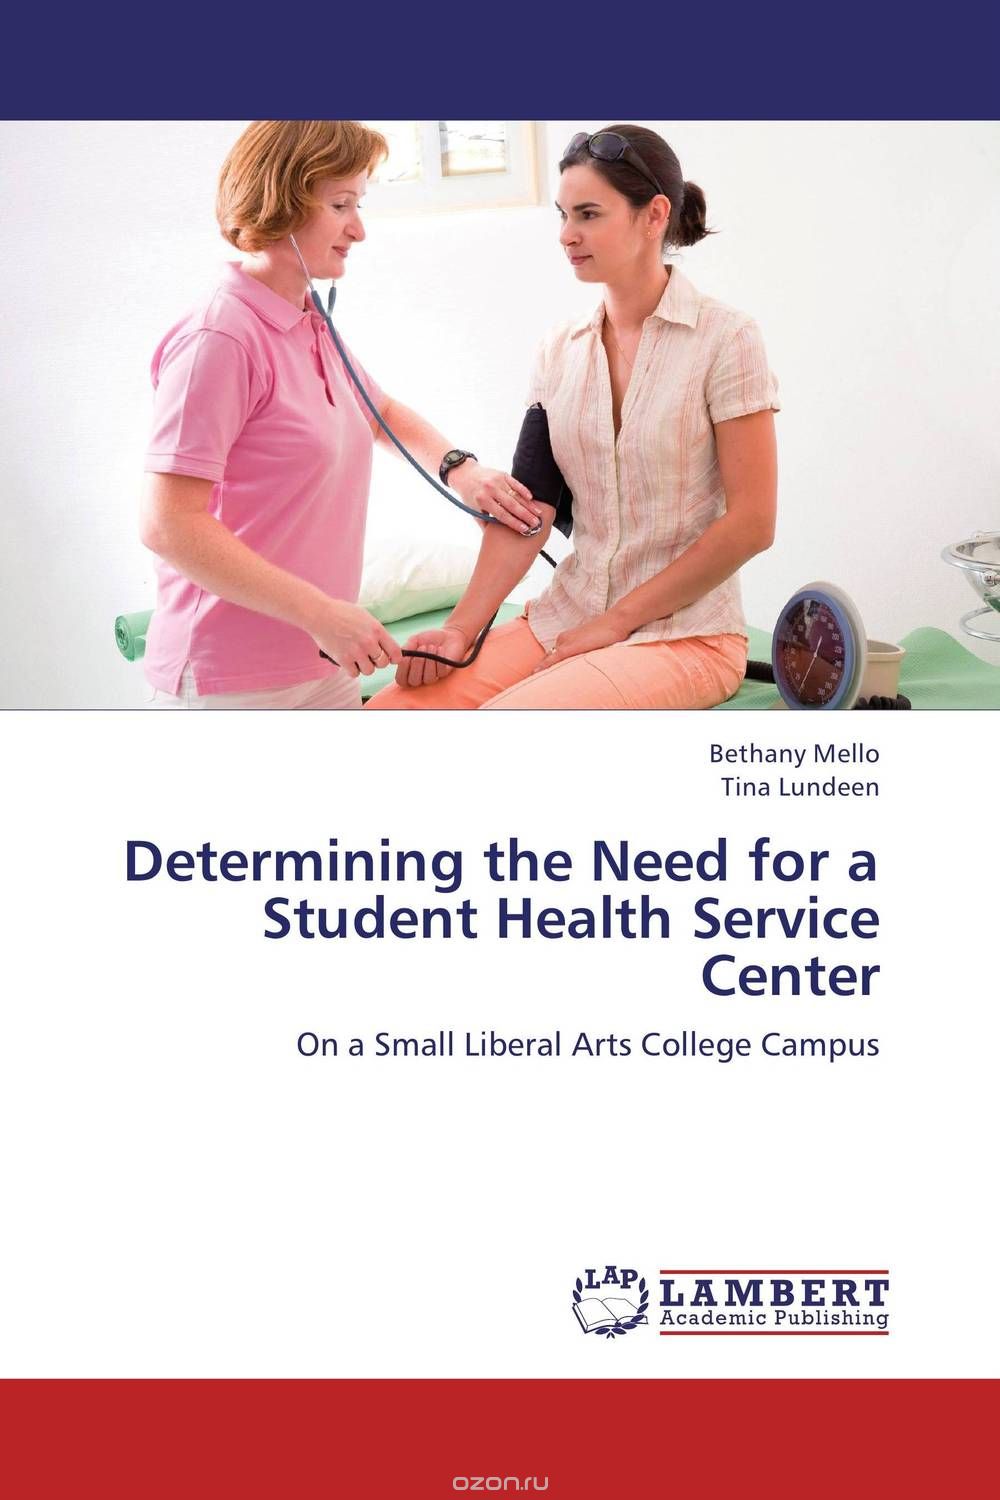 Скачать книгу "Determining the Need for a Student Health Service Center"